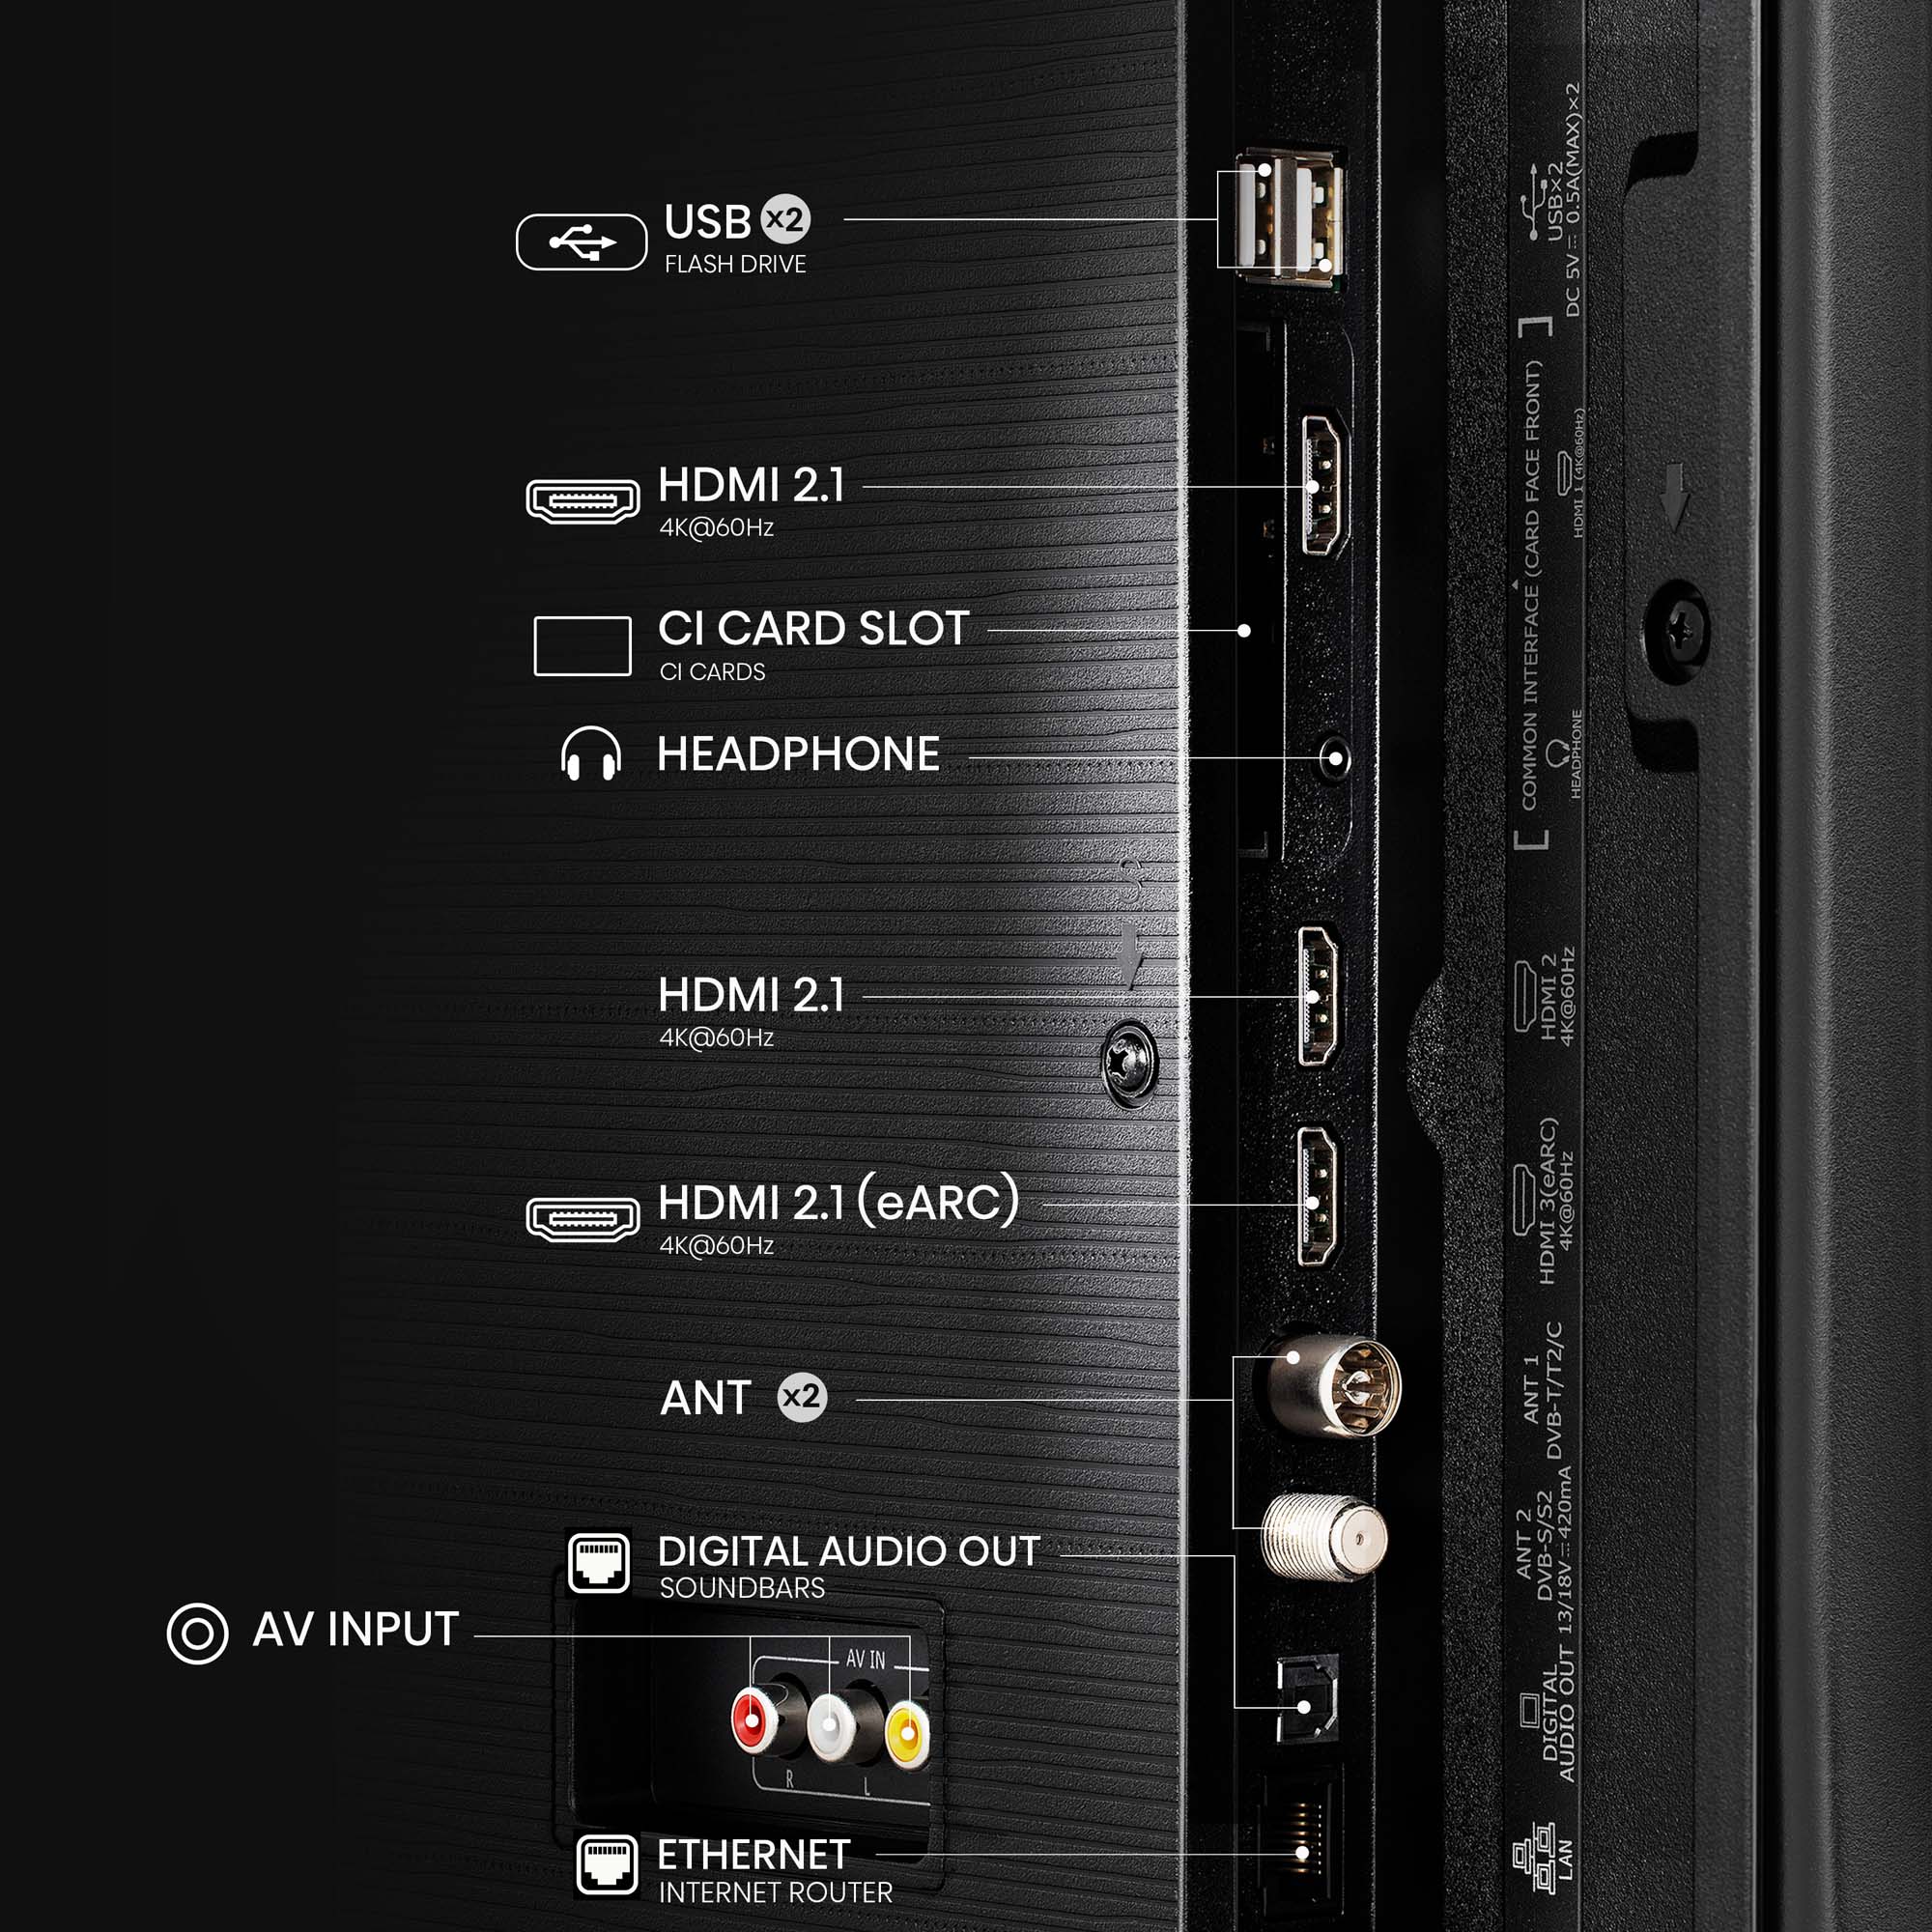 Hisense - 4K TV 50A6N, VIDAA Smart TV, Dolby Vision, Alexa integrado & VIDAA Voice